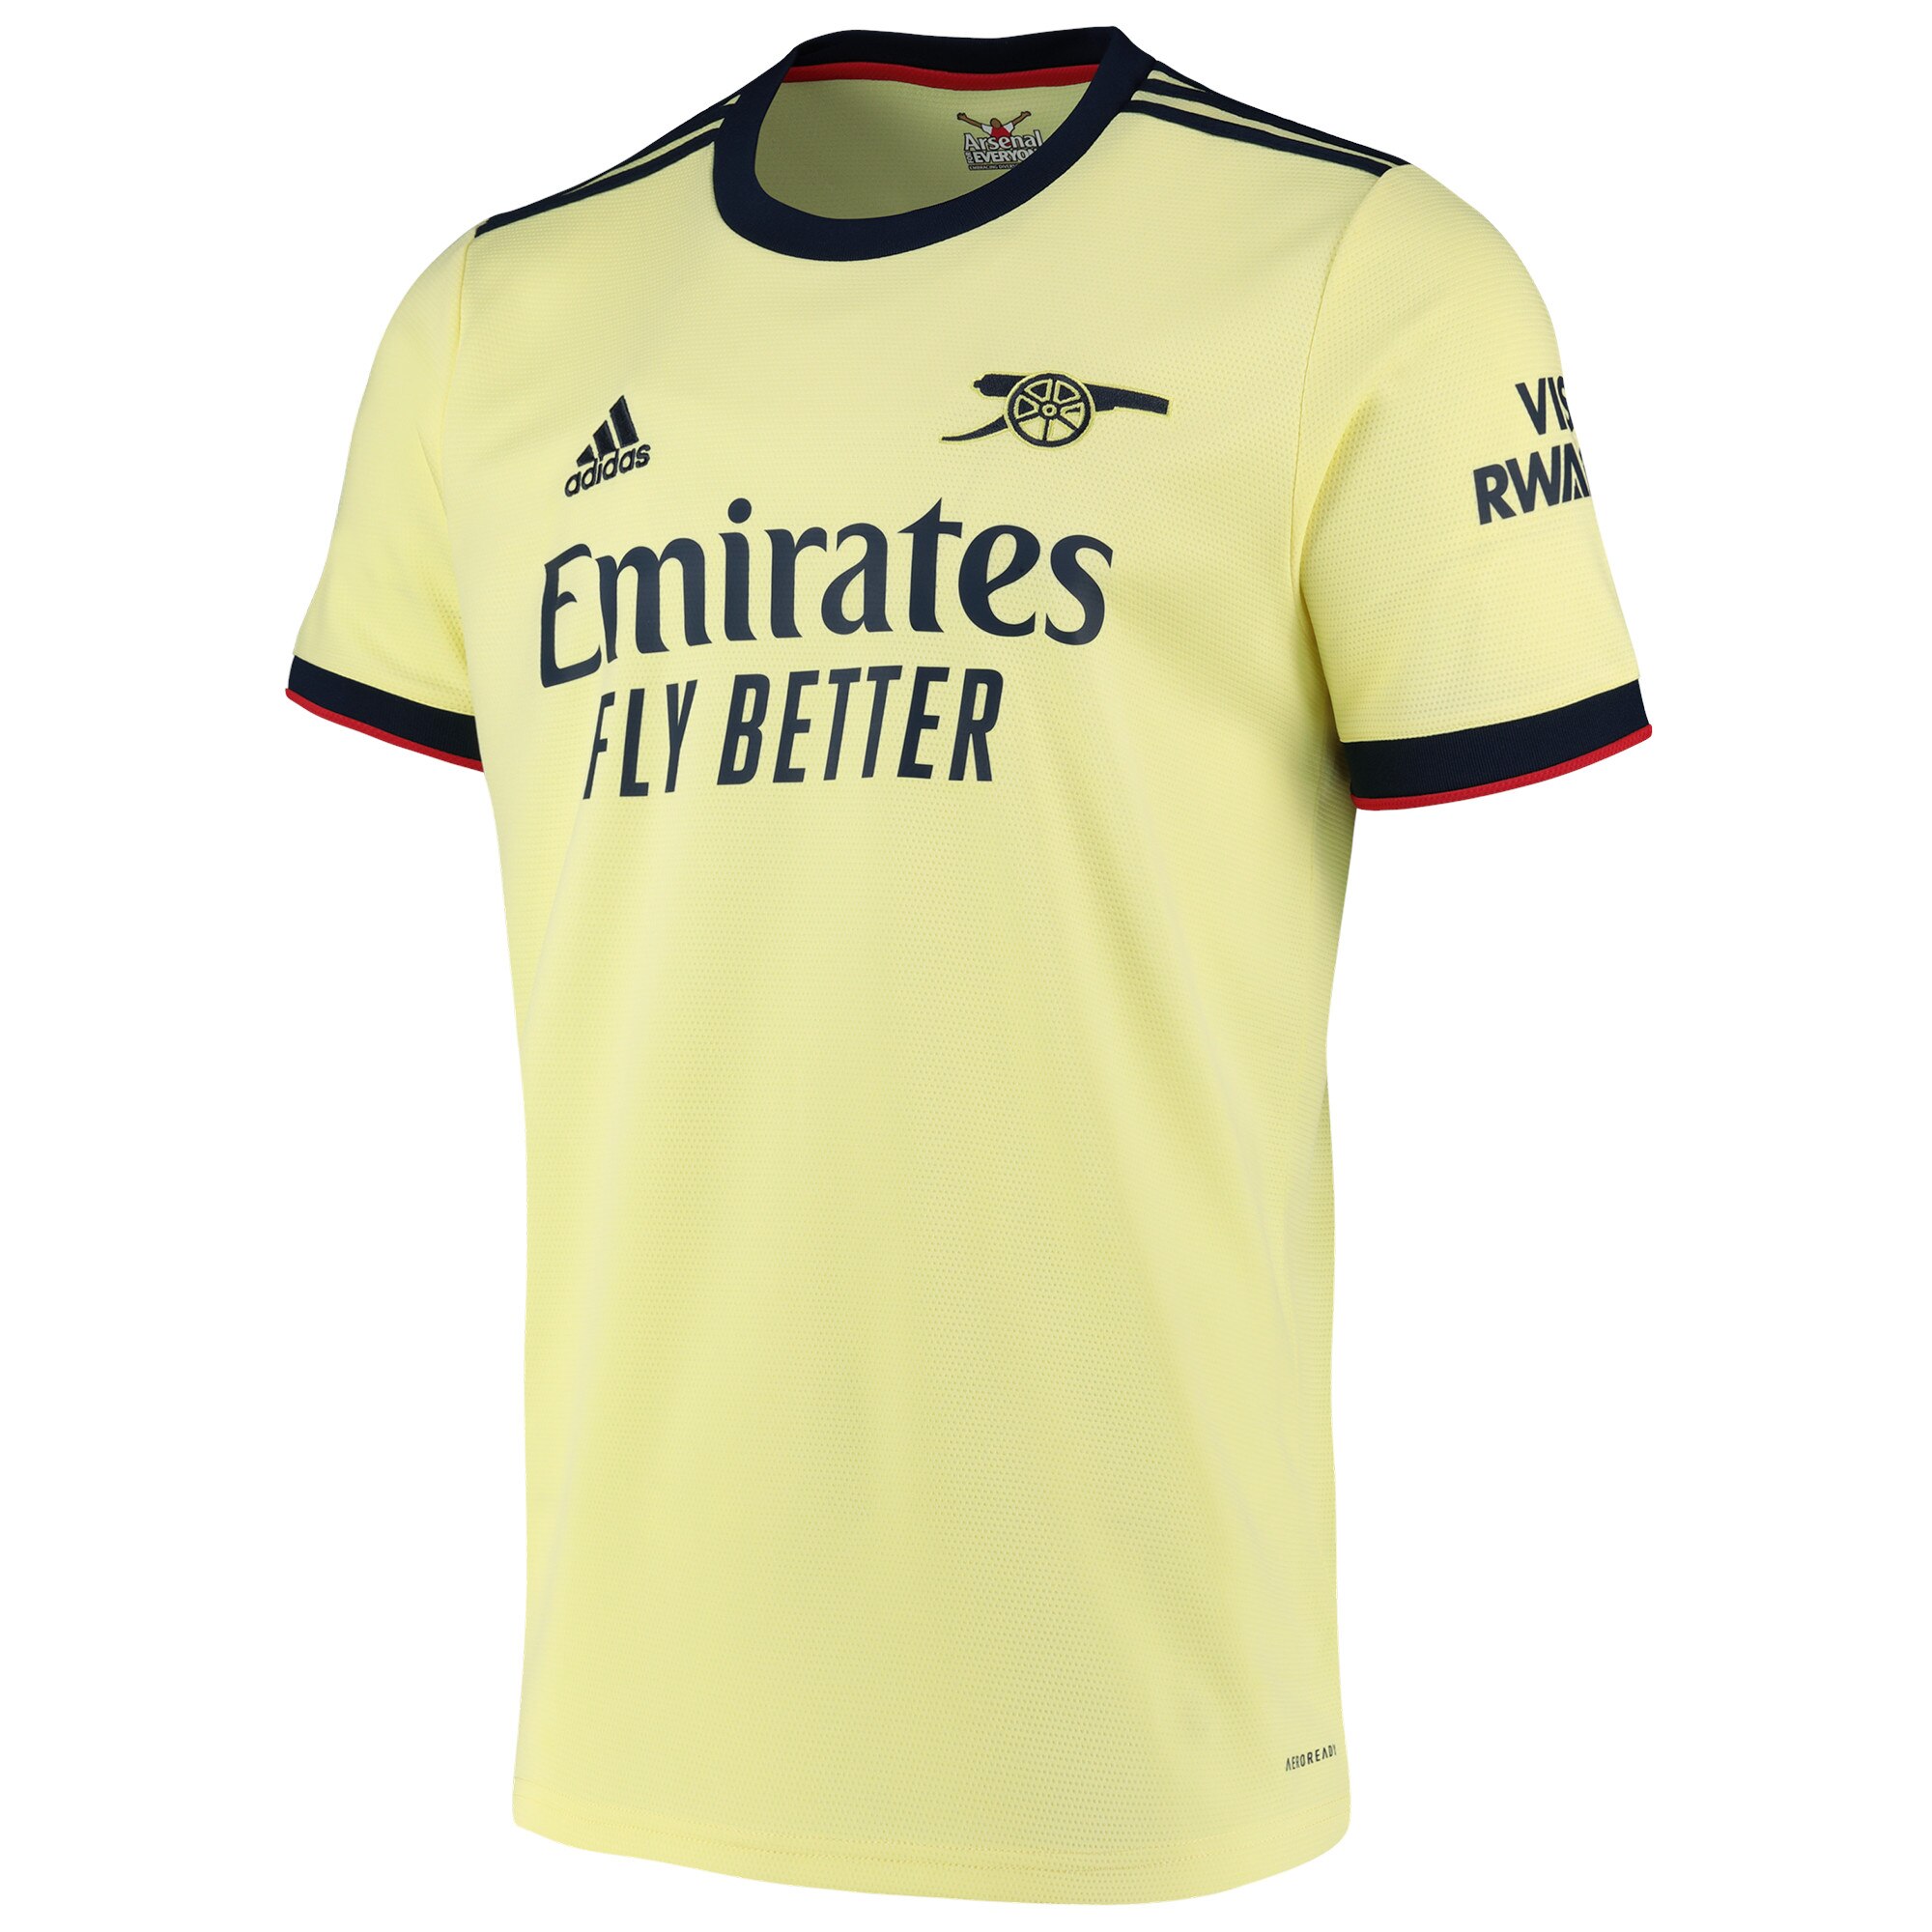 Arsenal Away Shirt 2021-22 with Tierney 3 printing